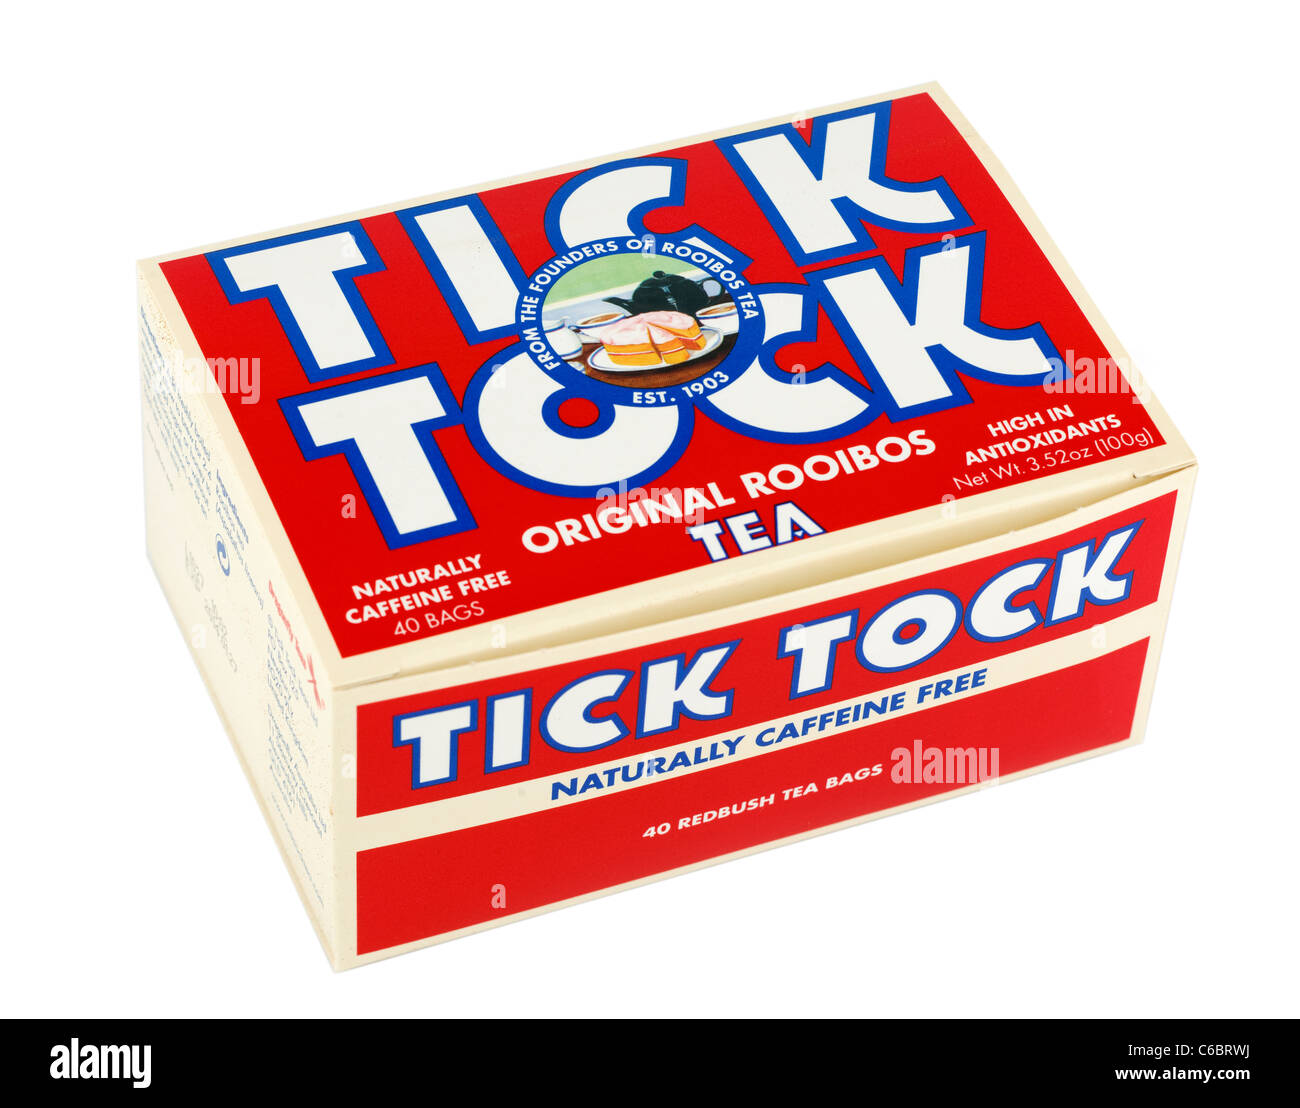 40 naturally caffeine free Redbush Tick Tock teabags. Stock Photo